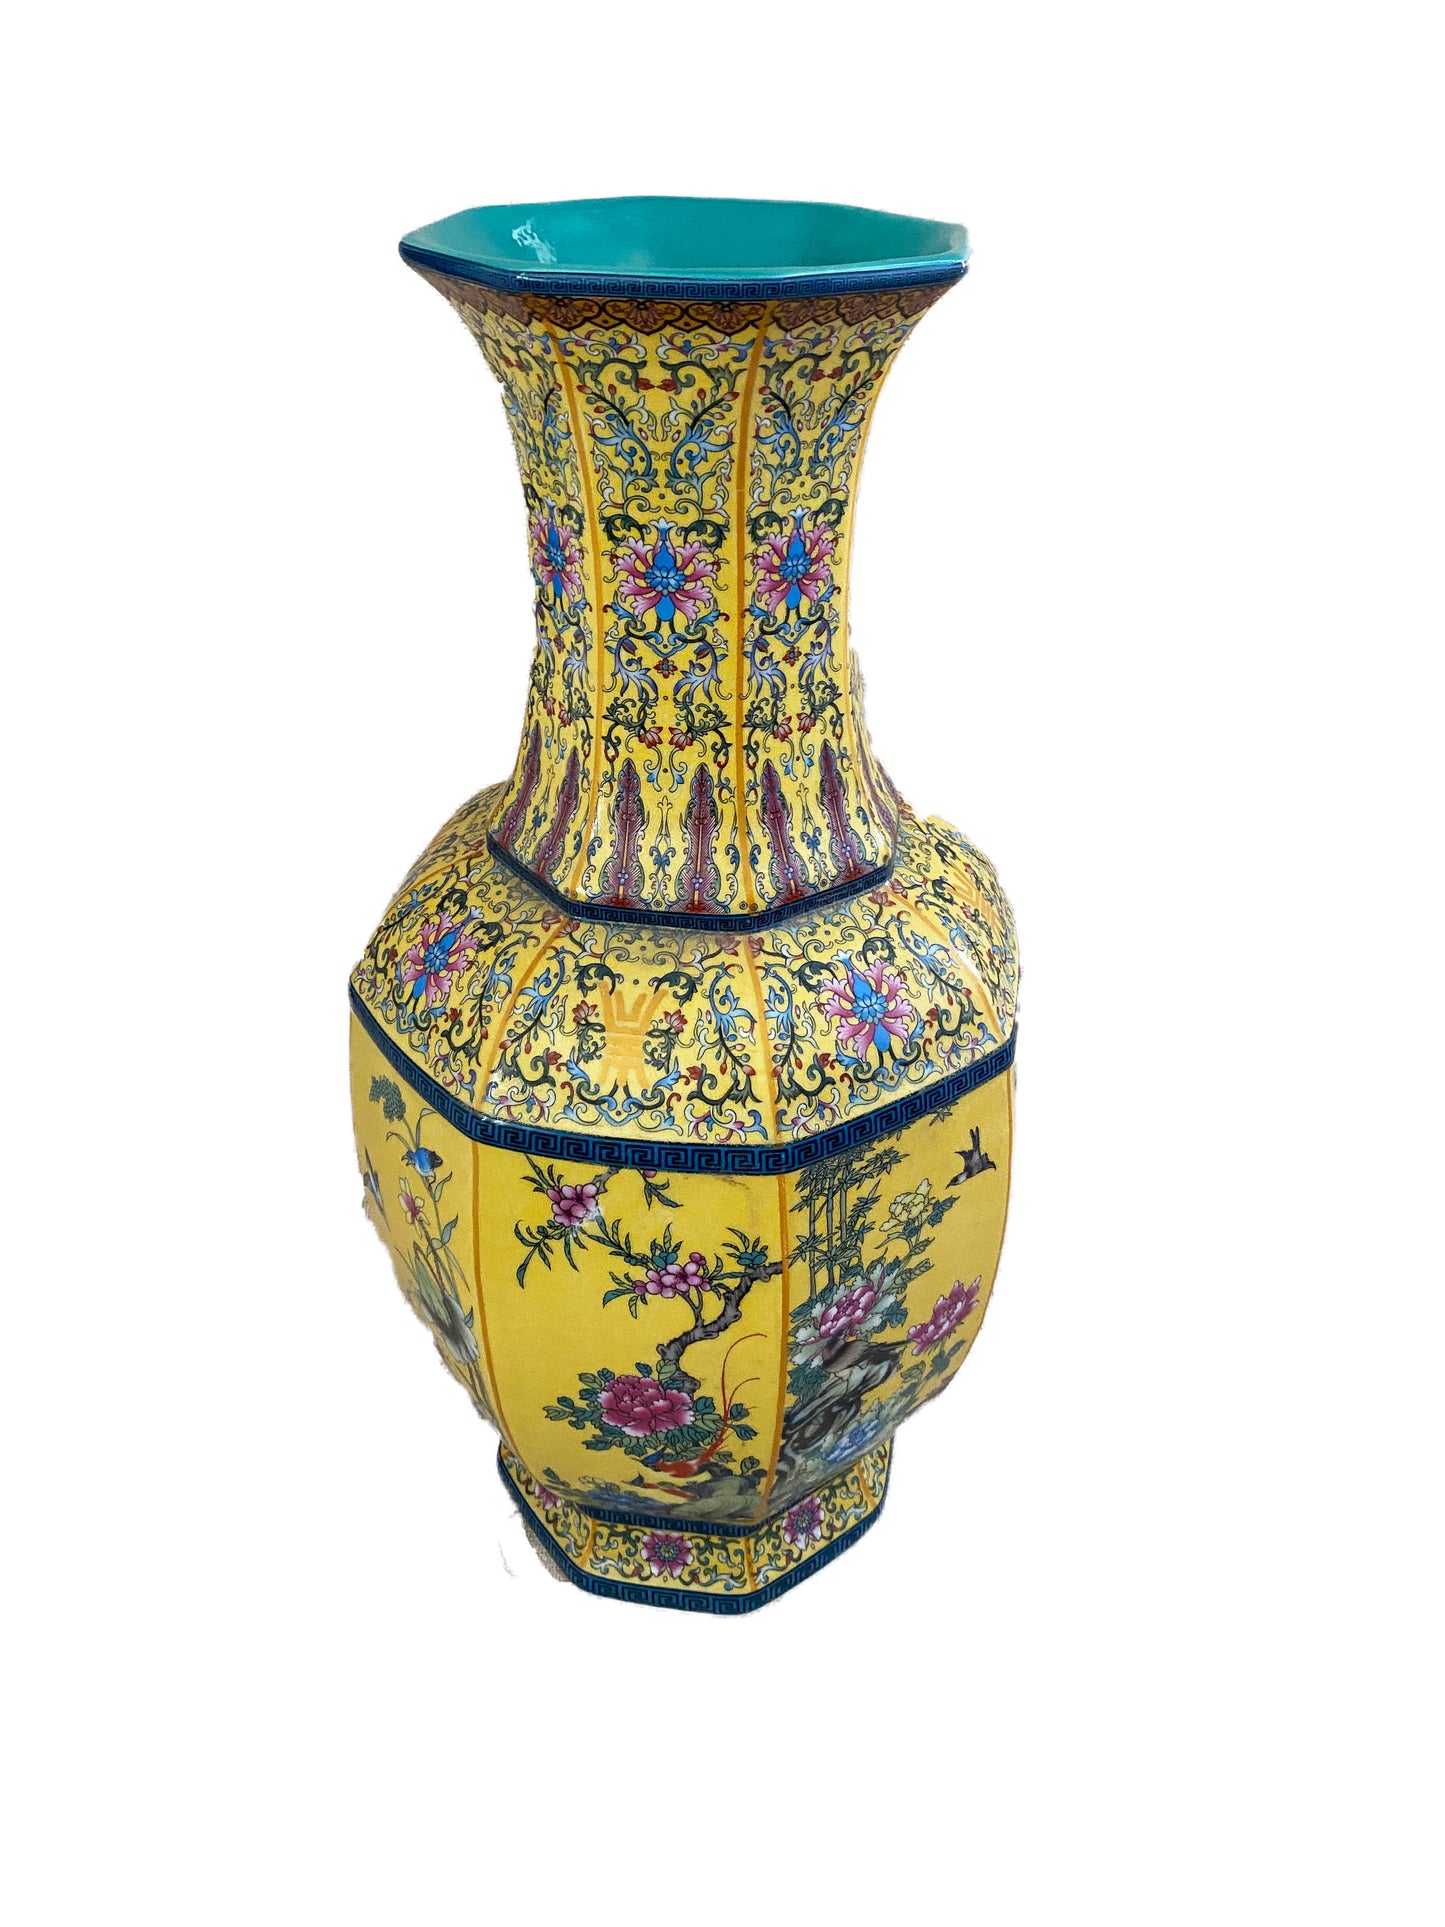 # 3133 Famille Jaune Hexagonal Shaped Vase 20" H